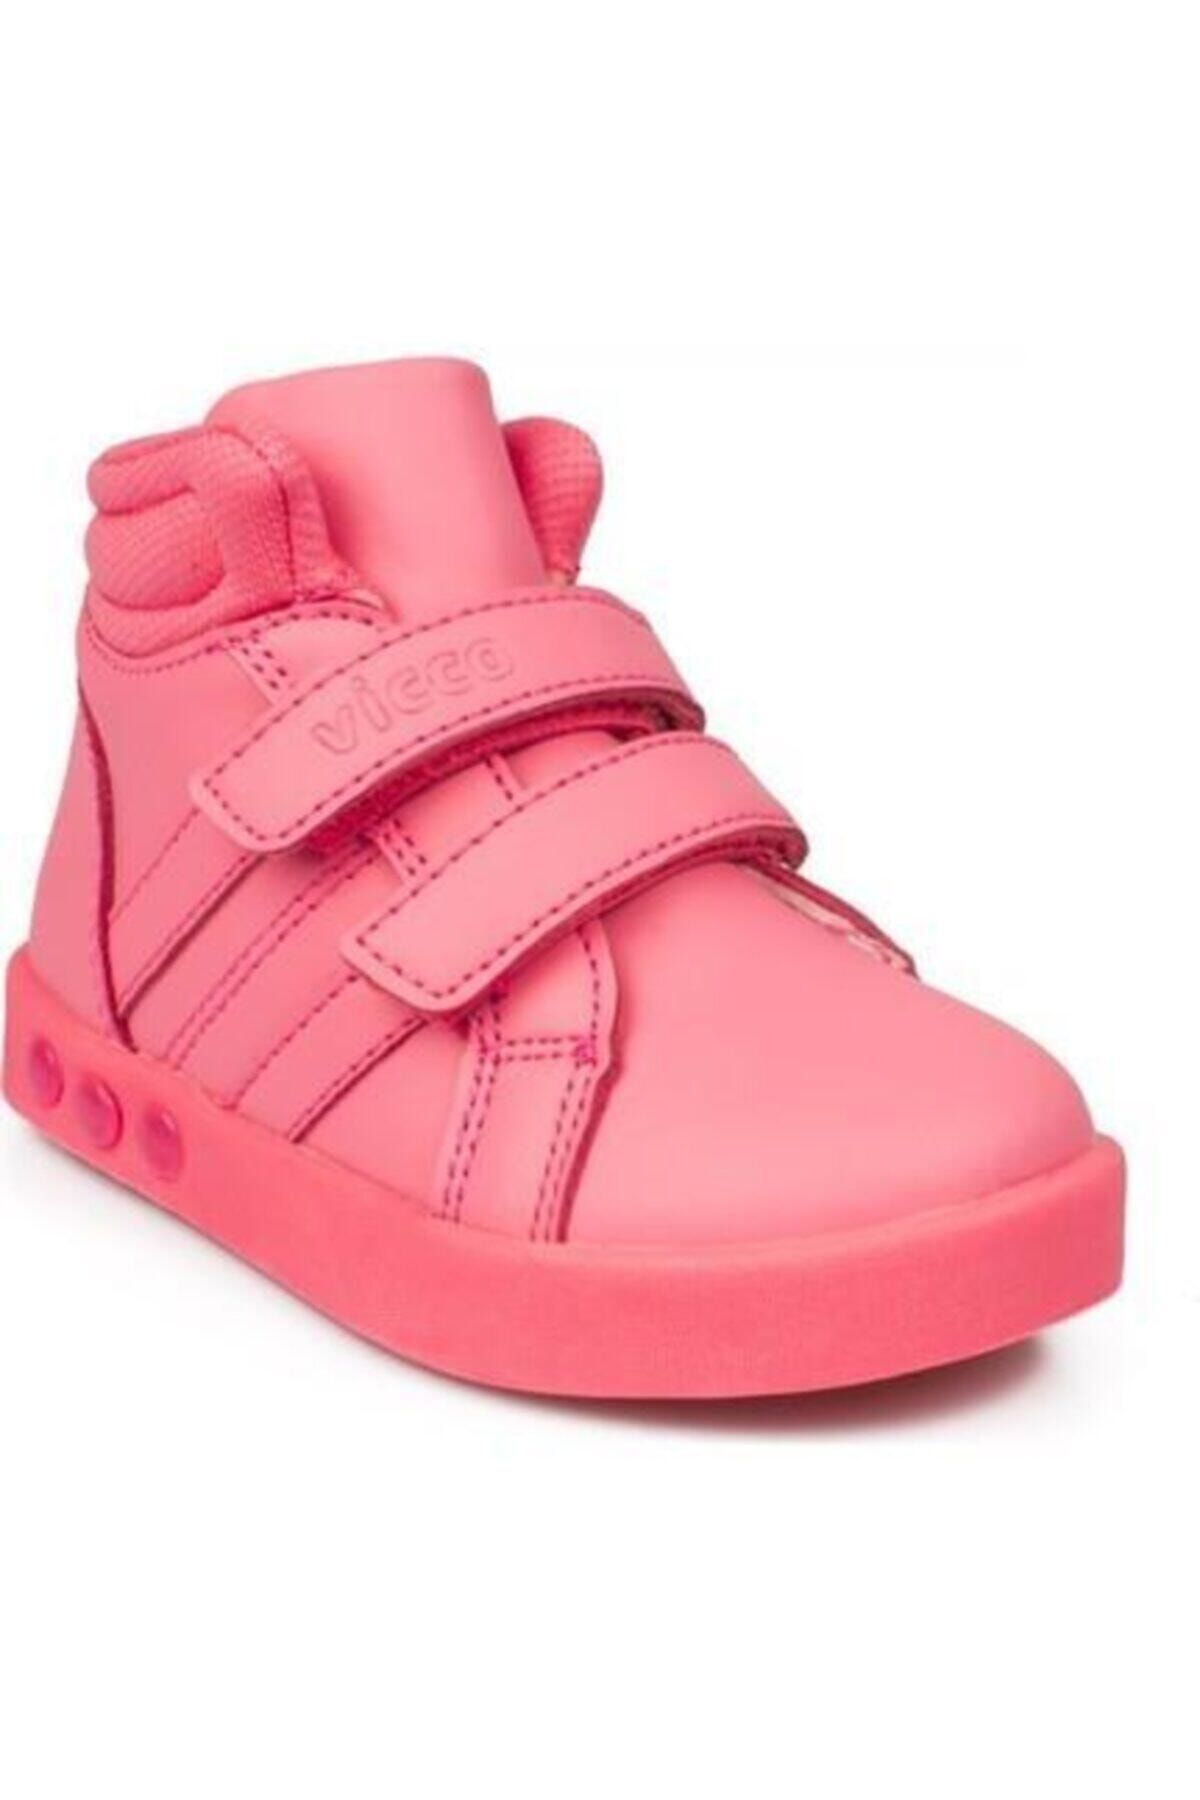 Vicco Kız Çocuk  Pembe  313.p19k.104 (26-30) Işıklı Sneaker